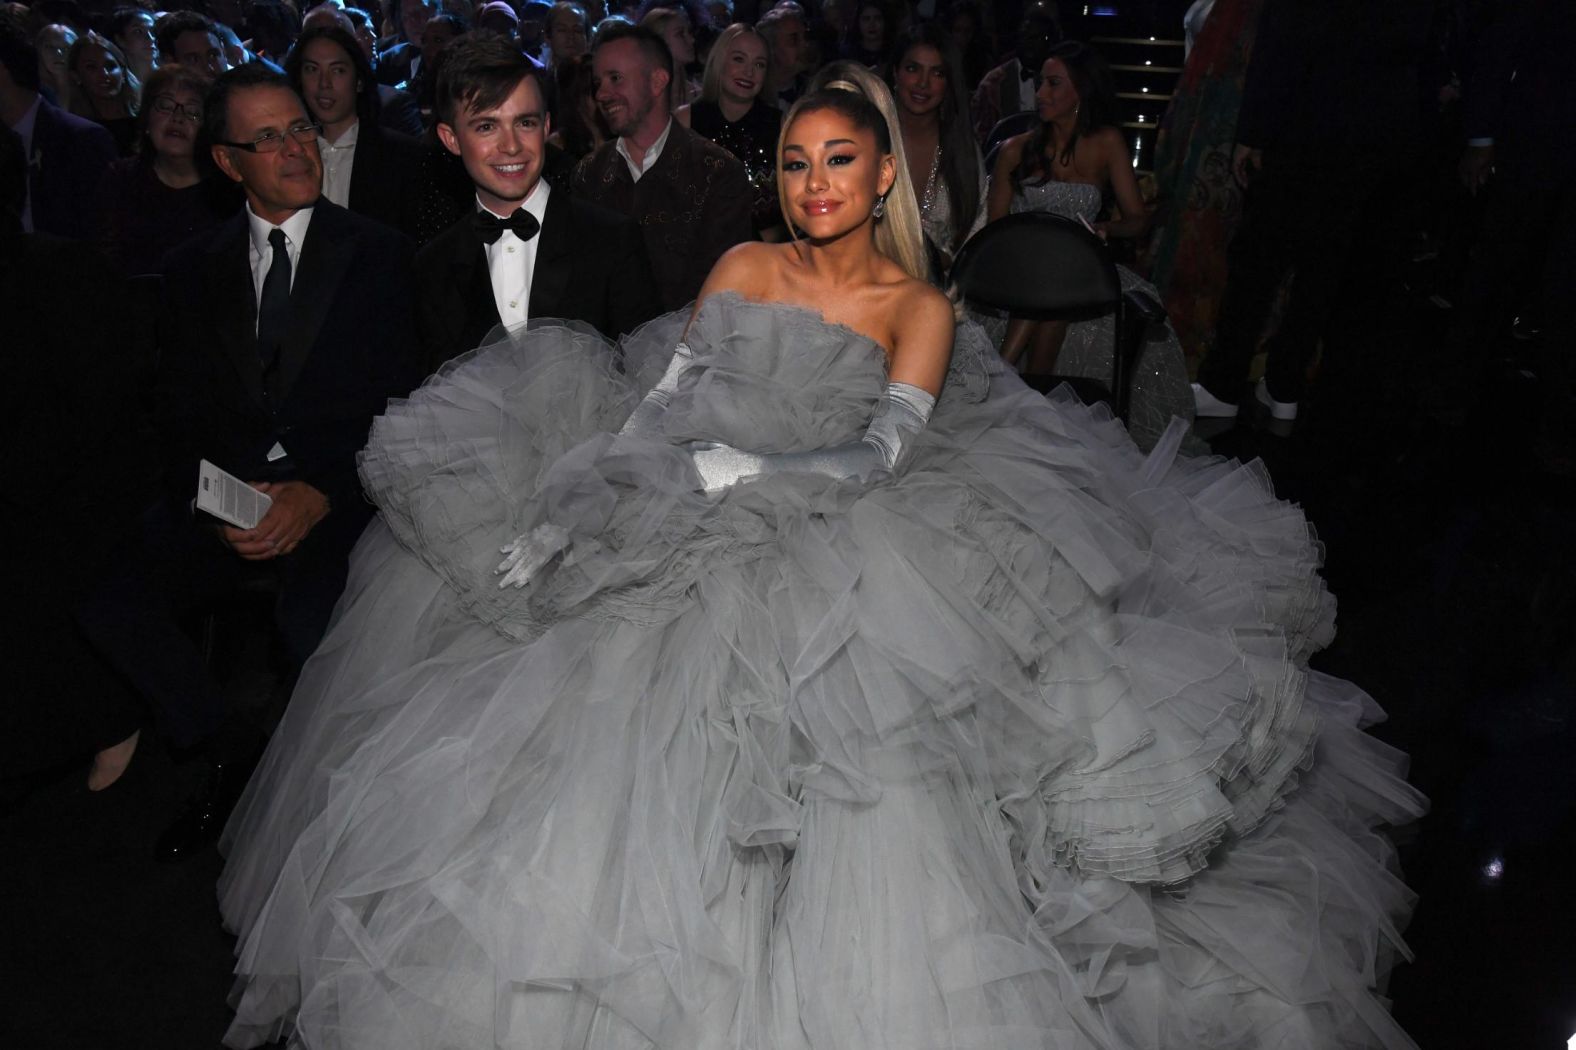 Ariana Grande attends the award show.